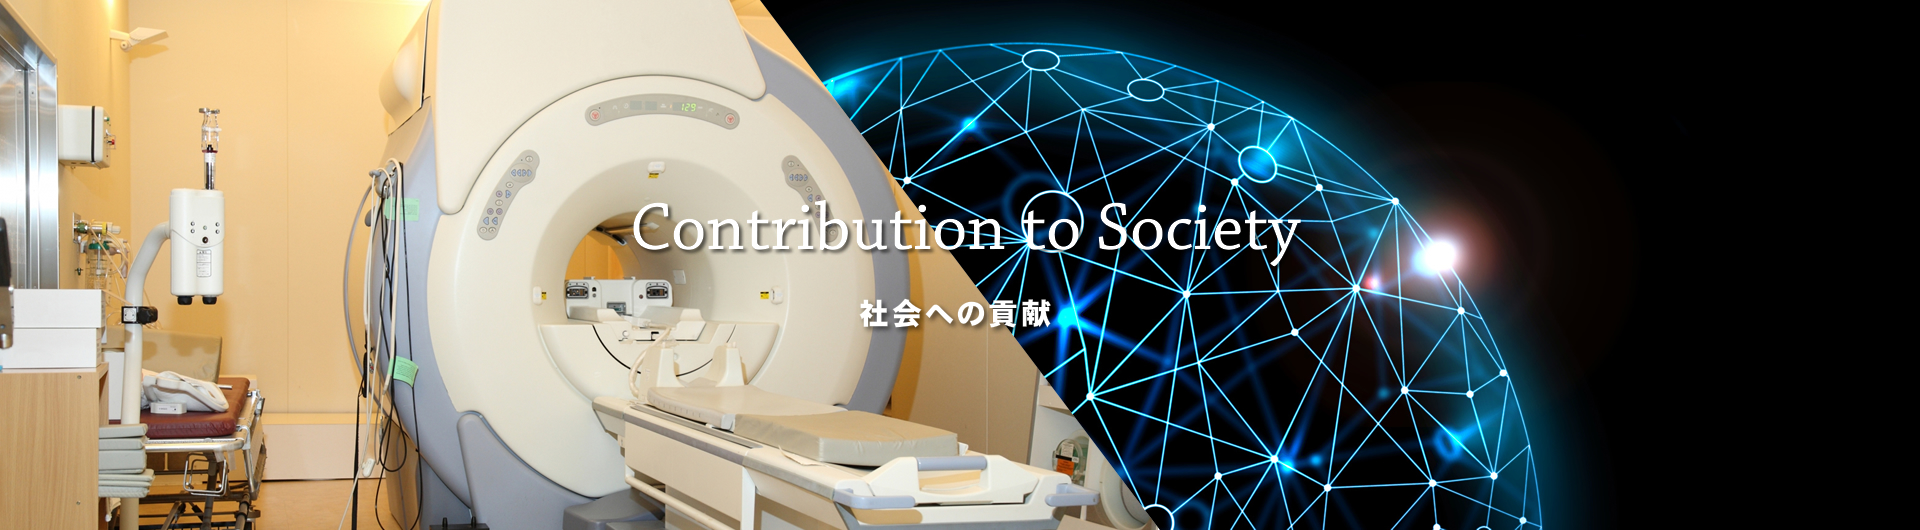 Contribution to Society 社会への貢献